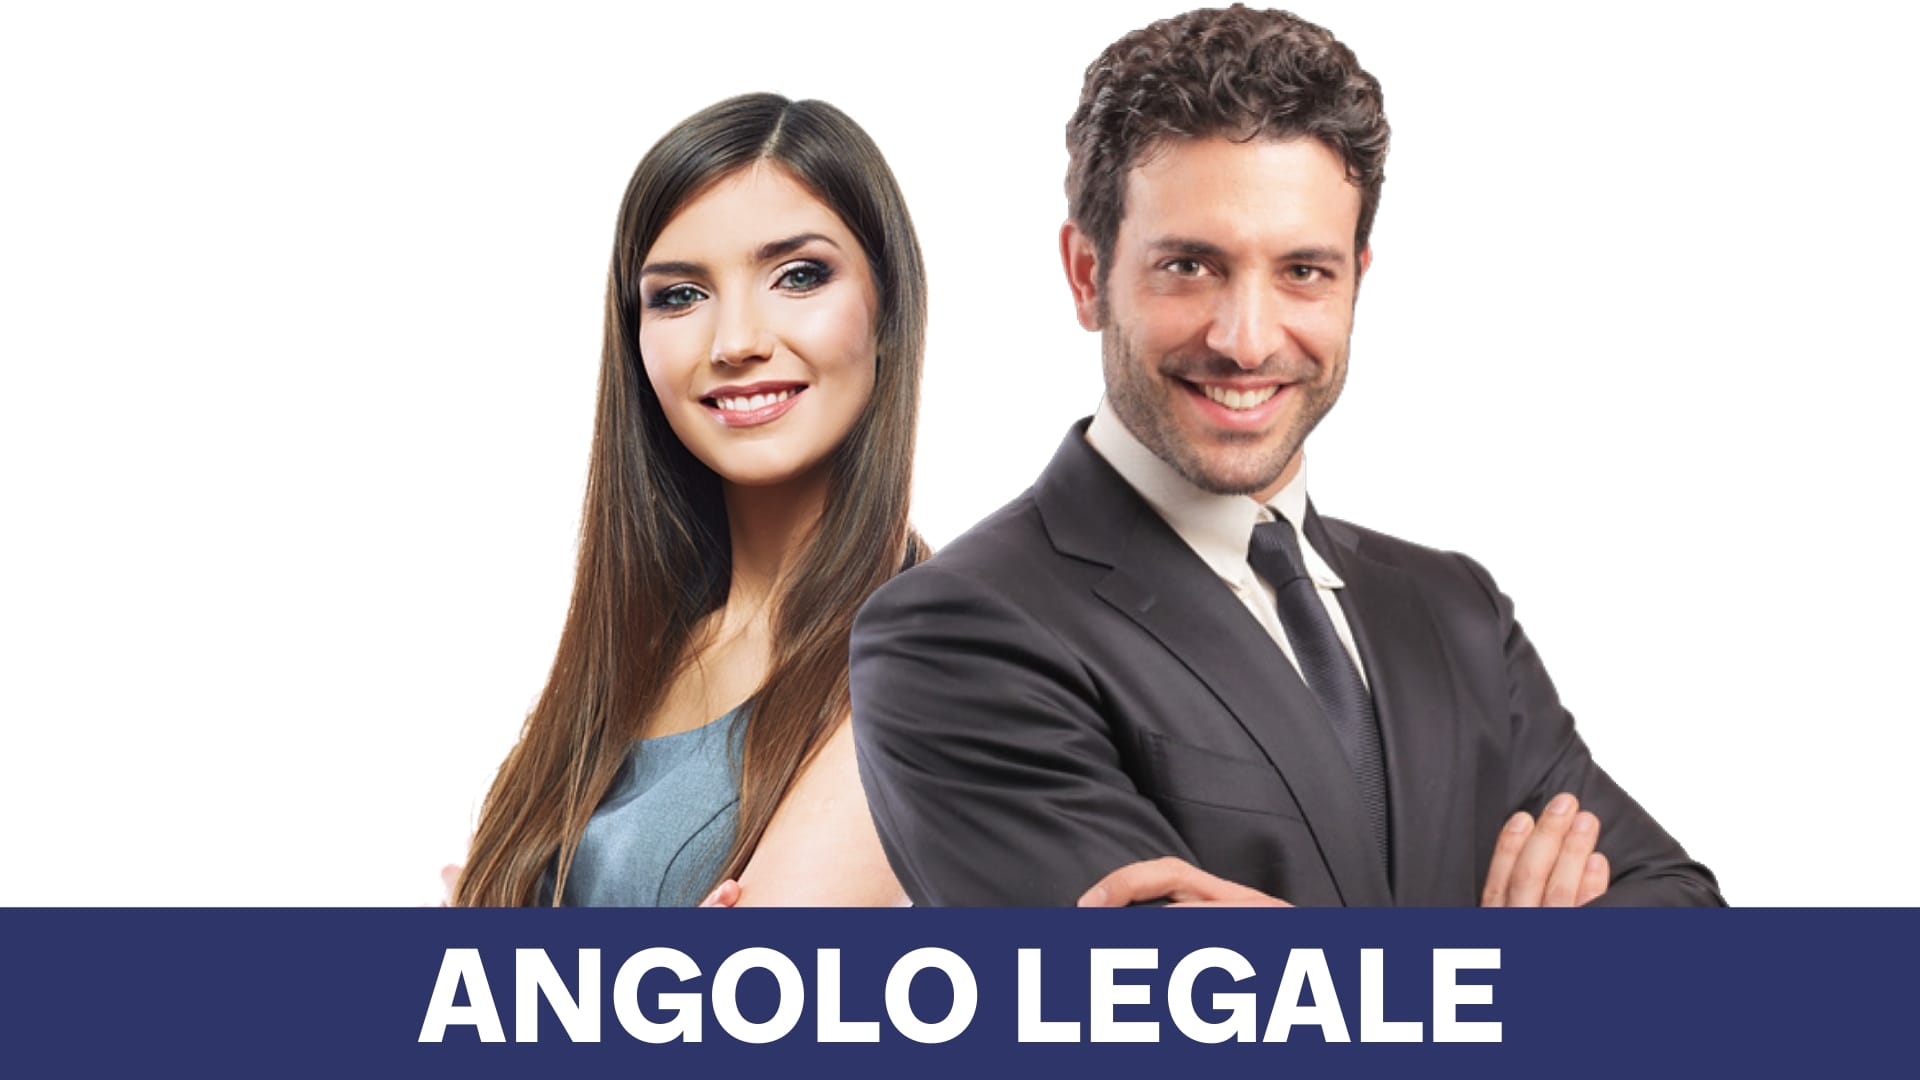 Angolo Legale FIAP v2